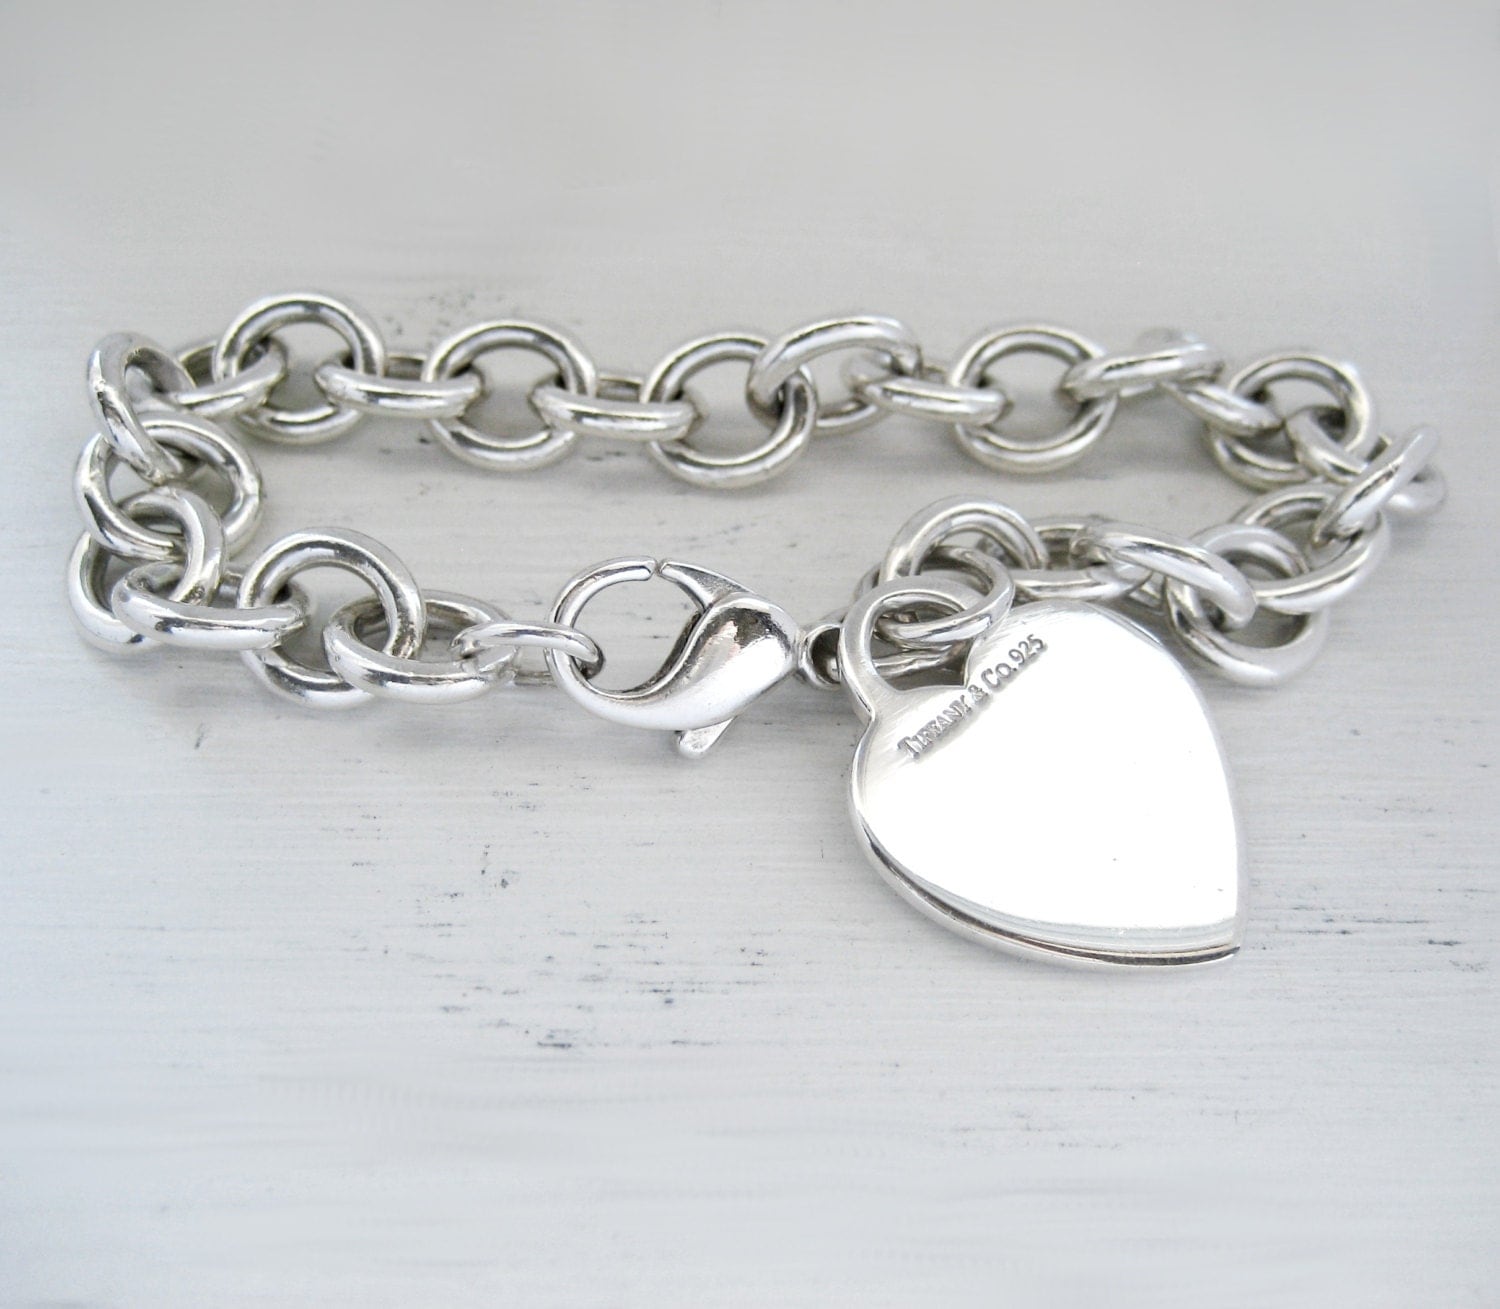 Tiffany & Co. Heart Charm Bracelet 925 Sterling Silver by baffy21